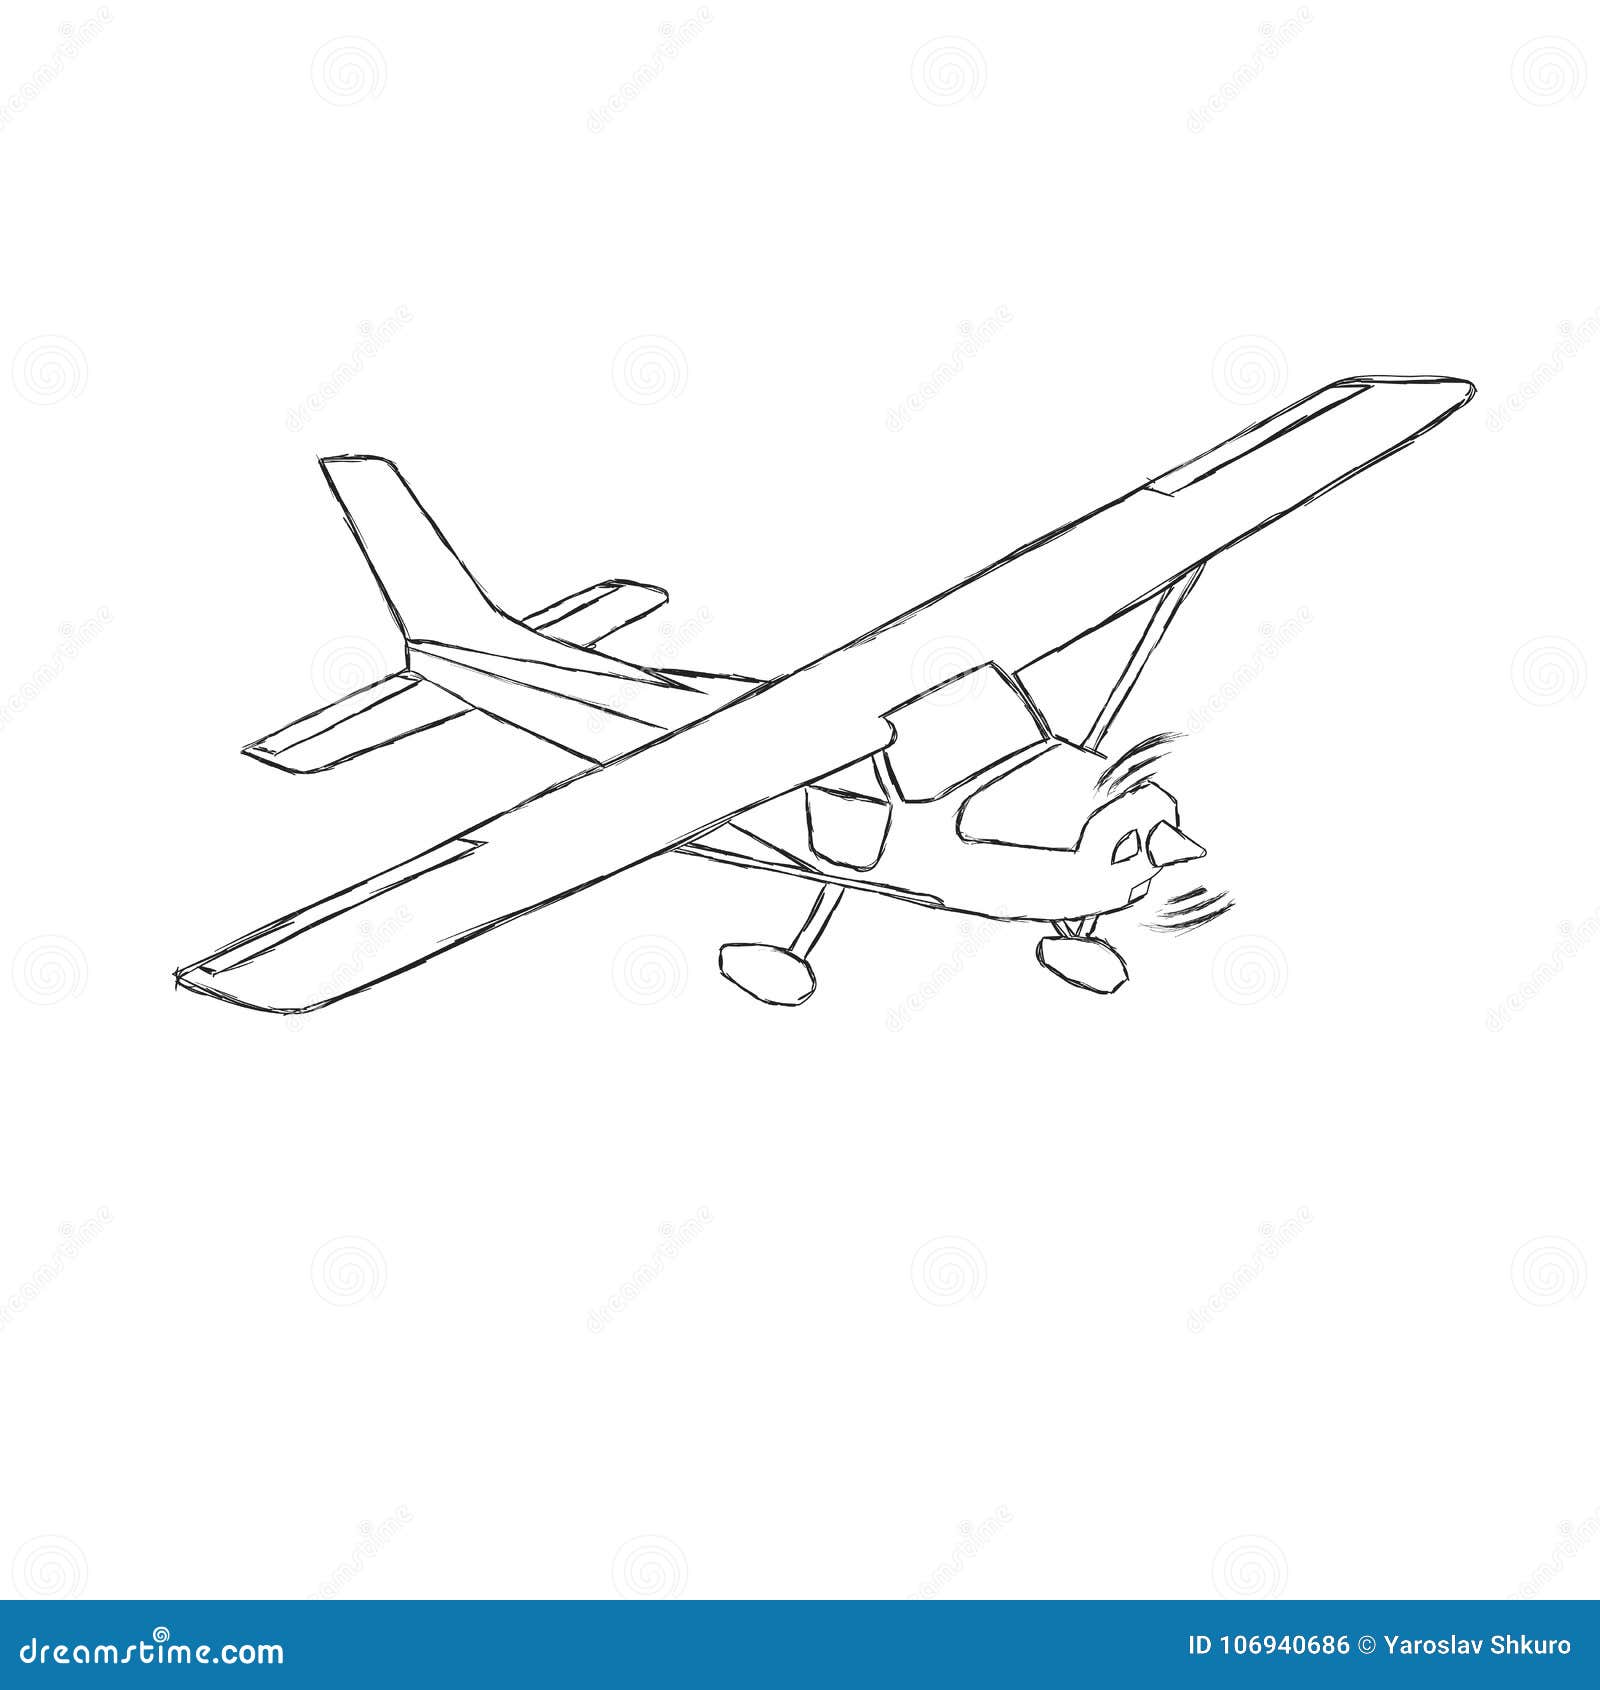 51977 Planes Sketch Images Stock Photos  Vectors  Shutterstock